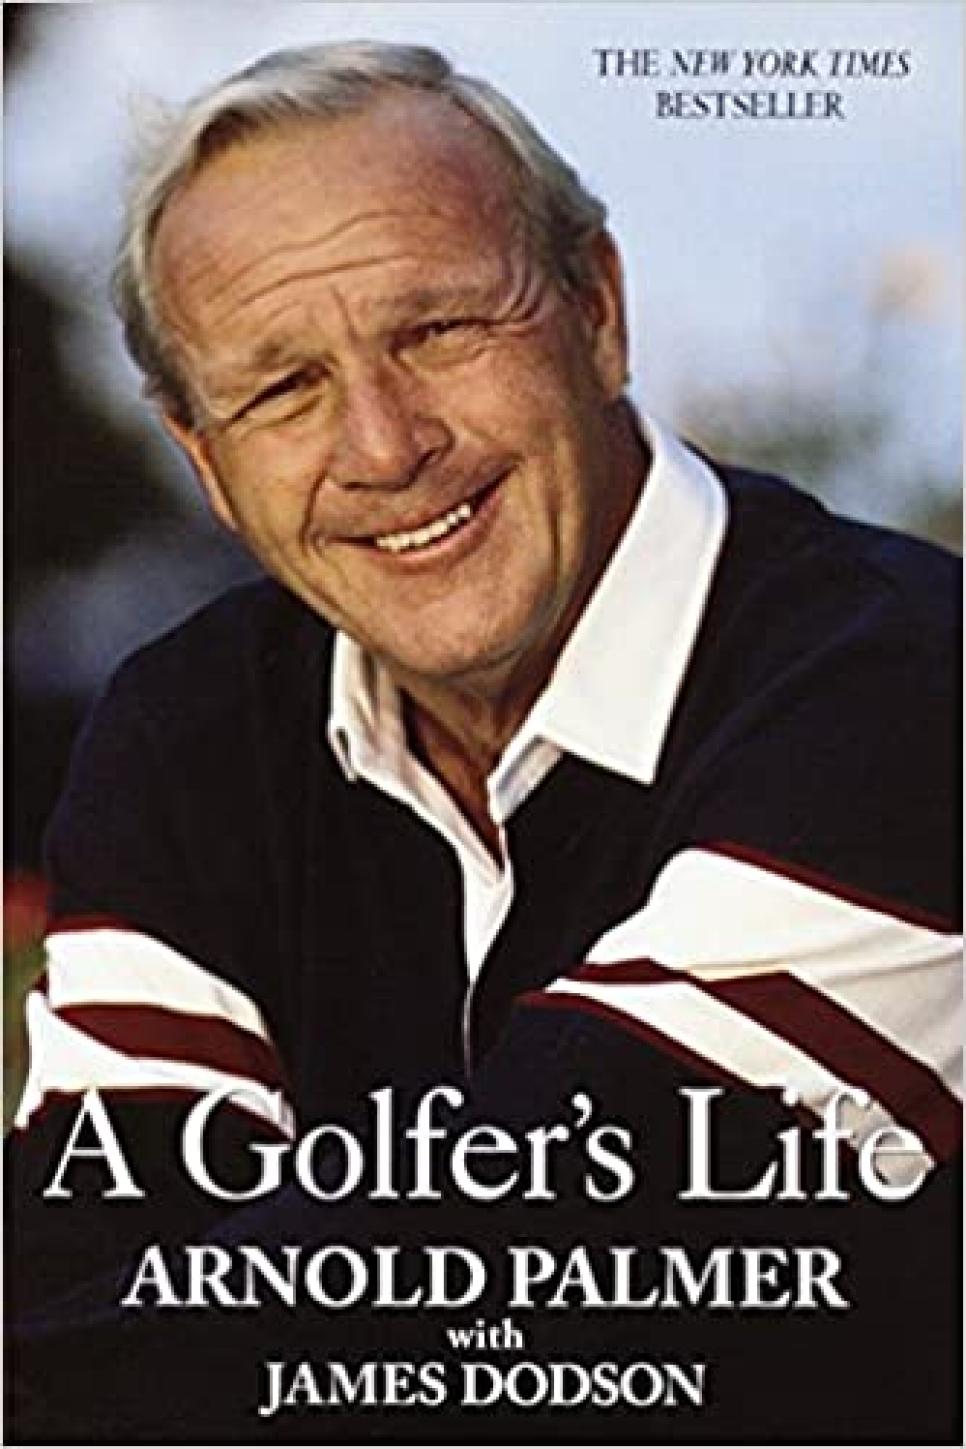 rx-amazona-golfers-life-by-arnold-palmer-with-james-dodson-1999.jpeg